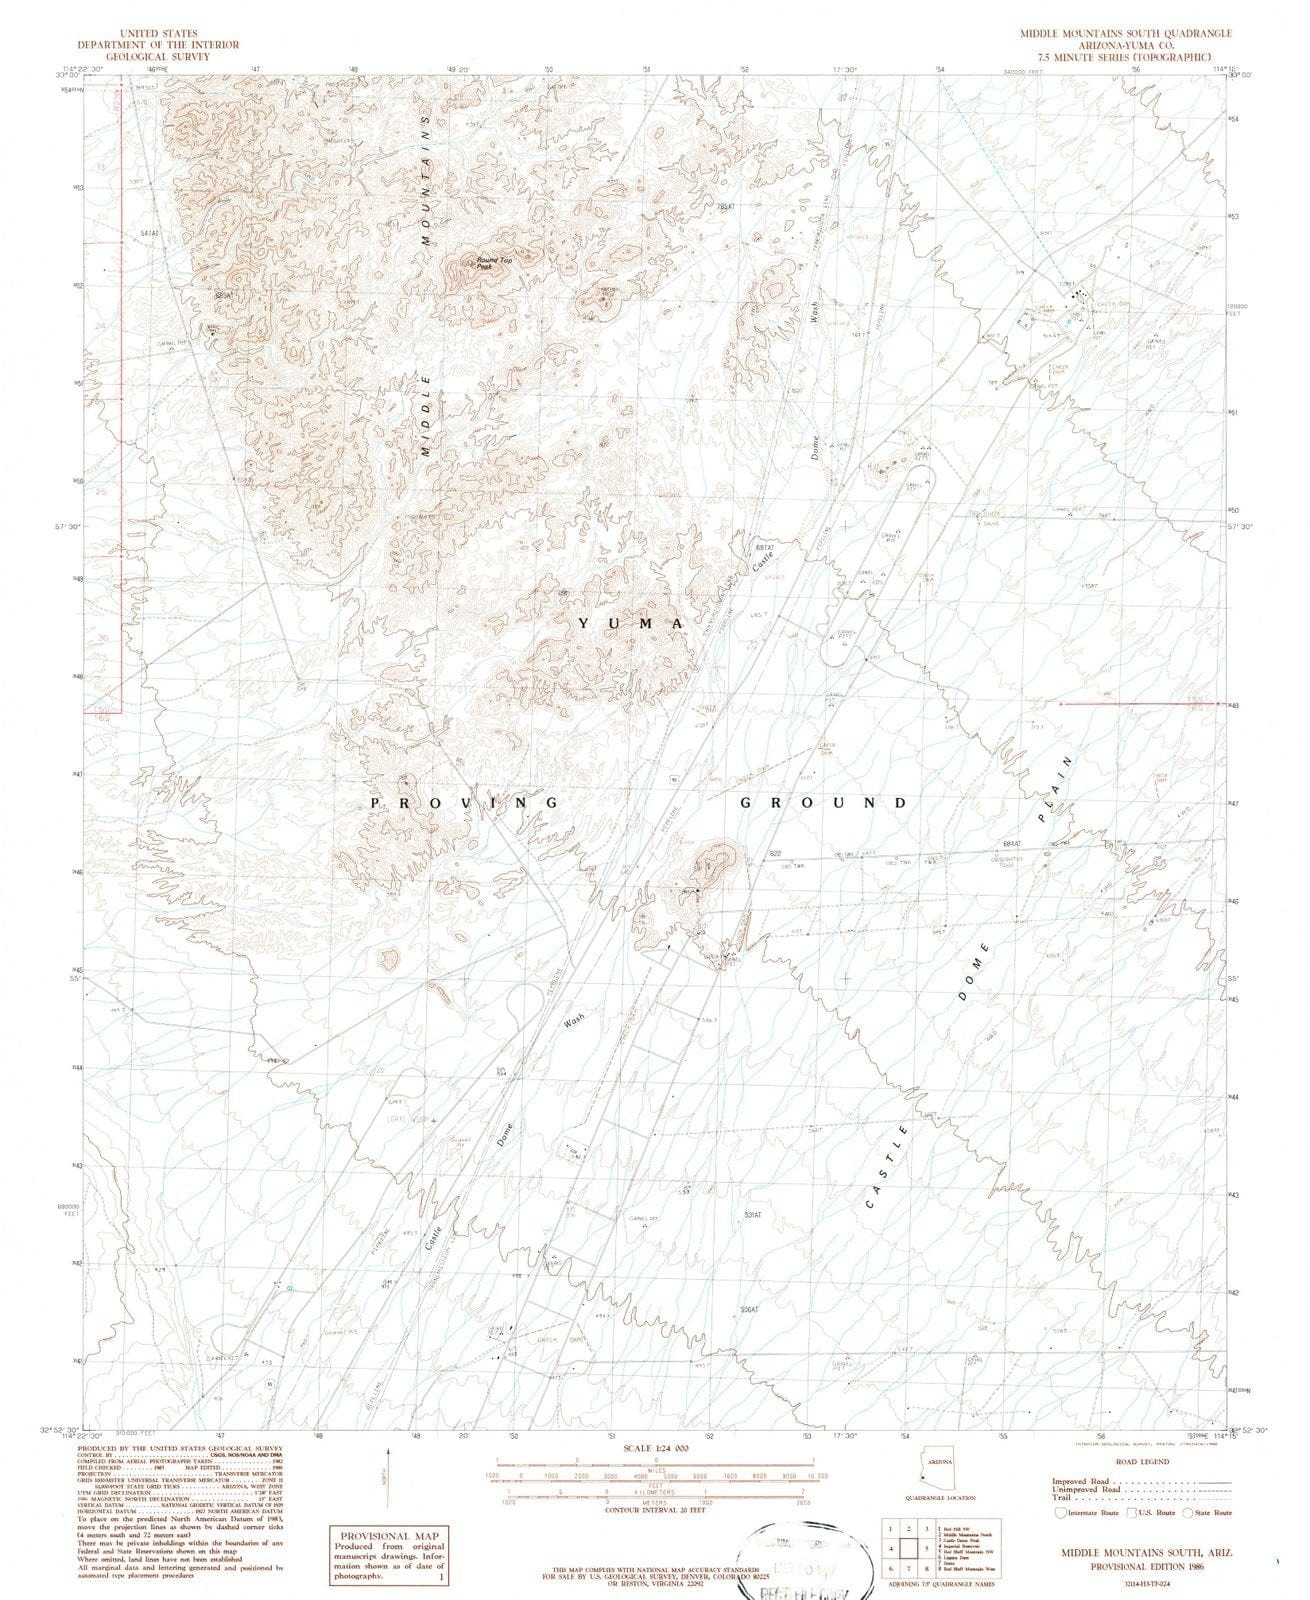 1986 Middle Mountains South, AZ - Arizona - USGS Topographic Map